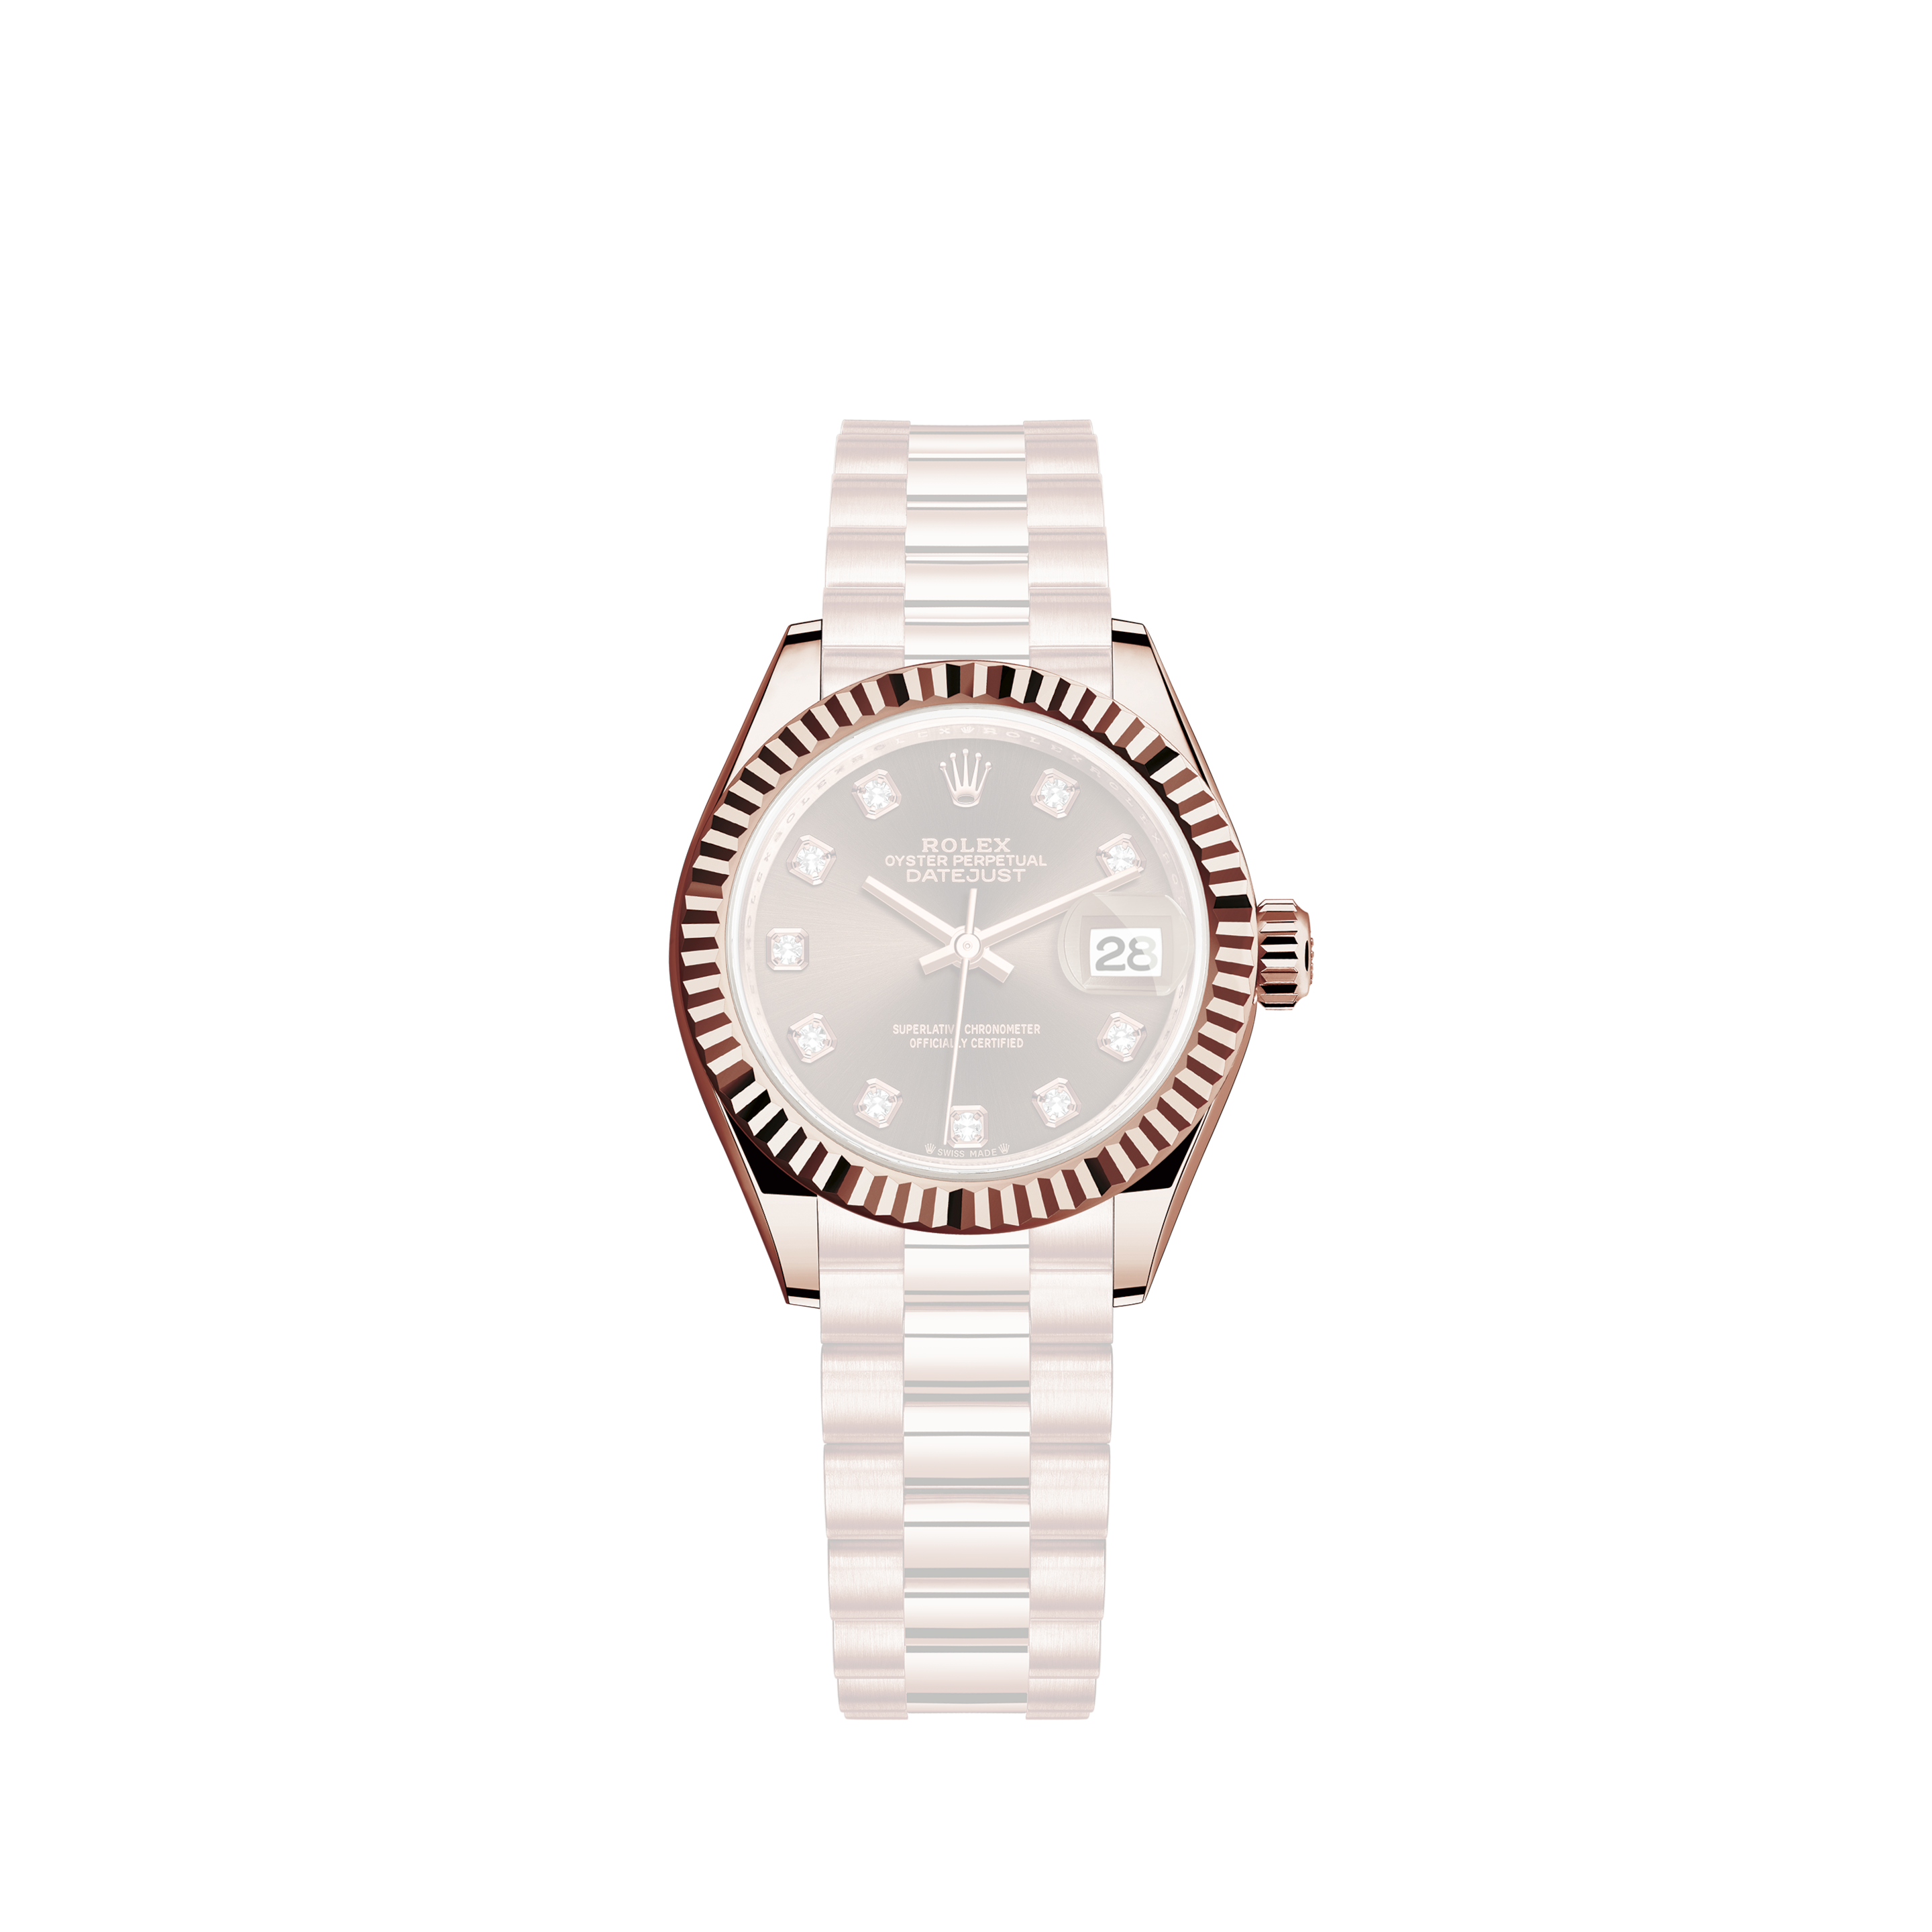 Rolex Daytona Ss Black Dial Ceramic Bezel 116500ln Watch